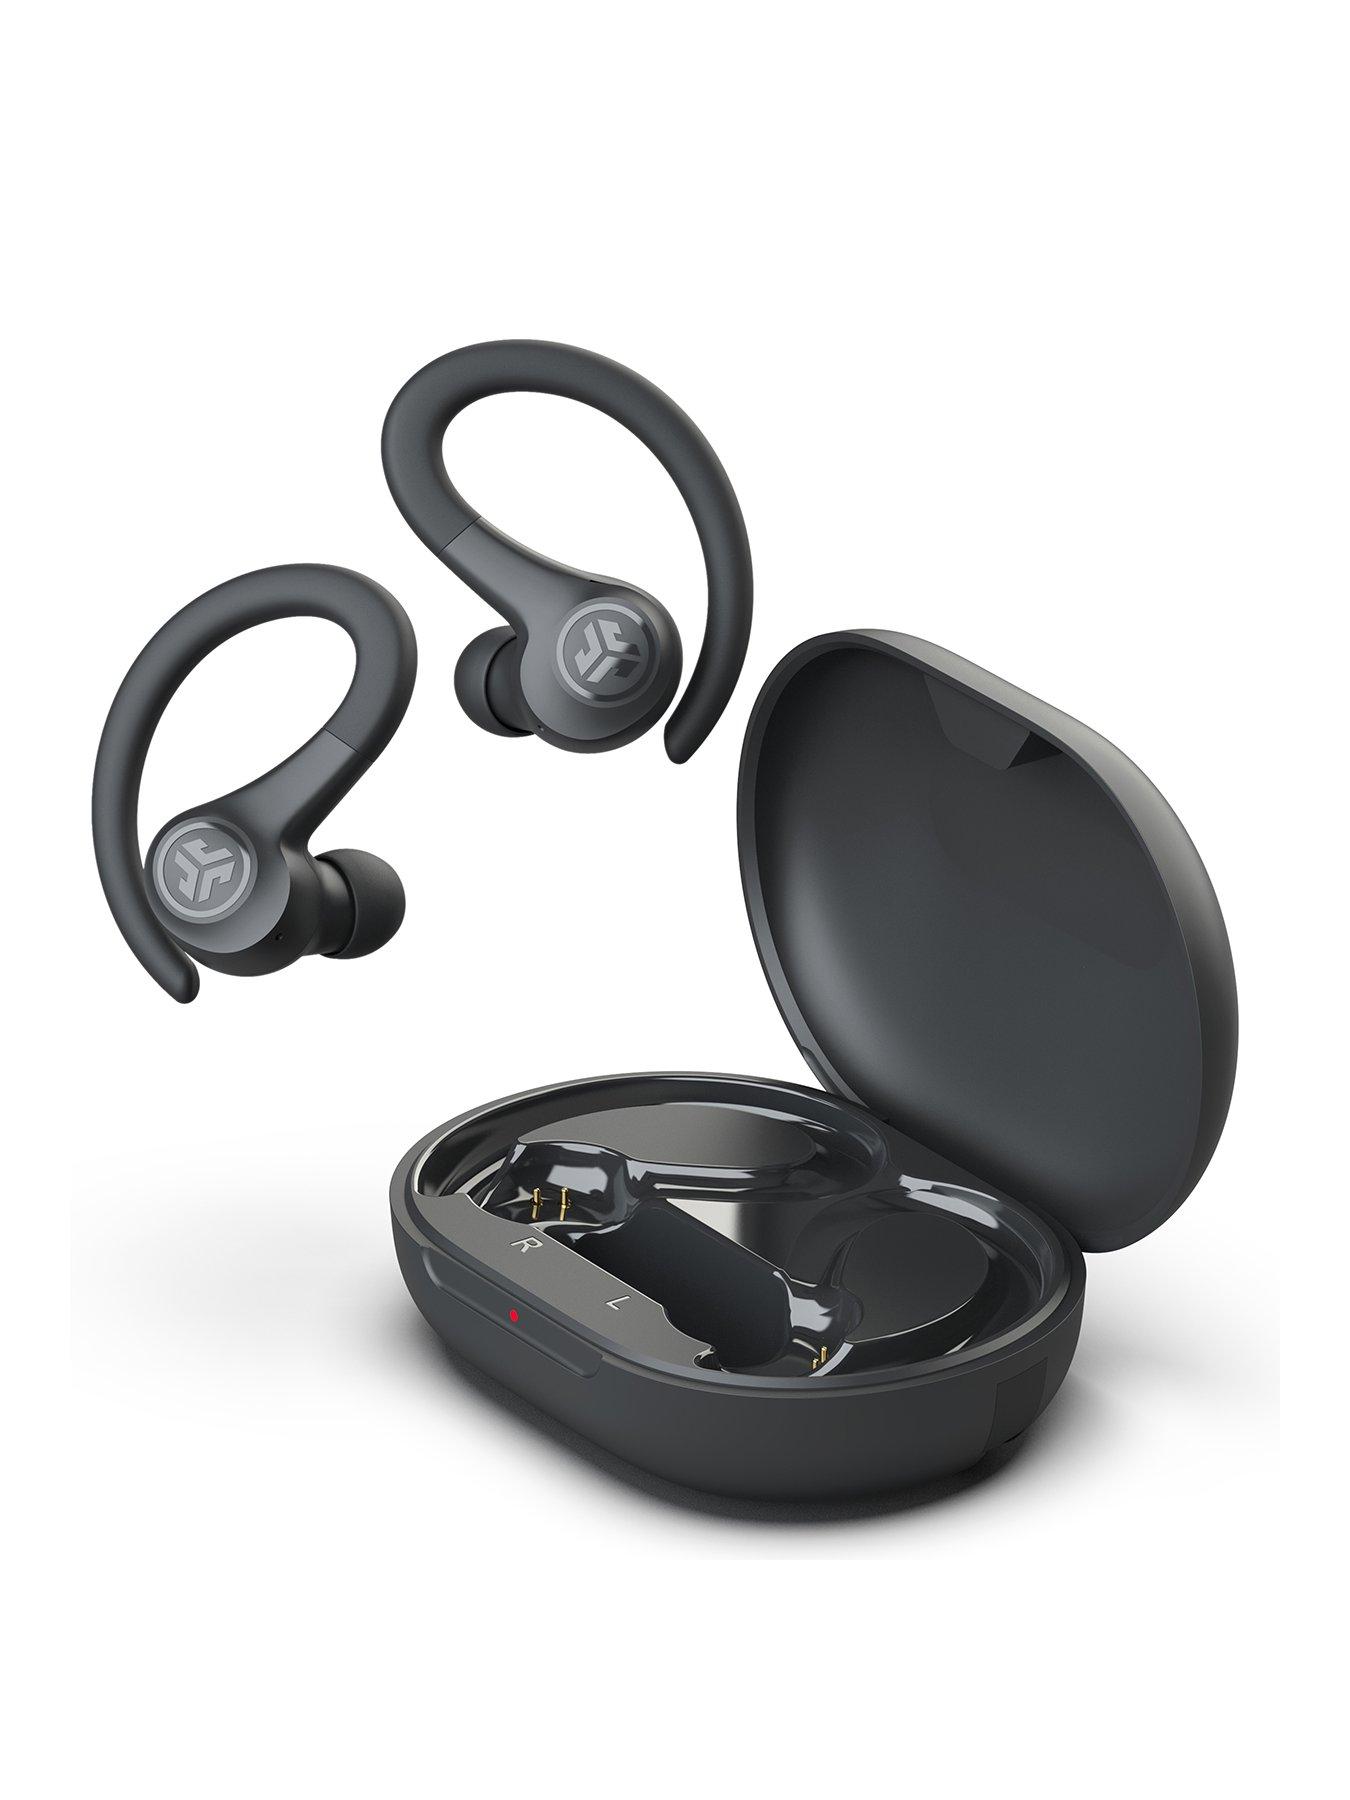 Nothing Ear (stick) - wireless earbuds, comfortable ergonomic design, 4.4g  ultra lightweight, custom dynamic driver, Clear Voice Technology, press